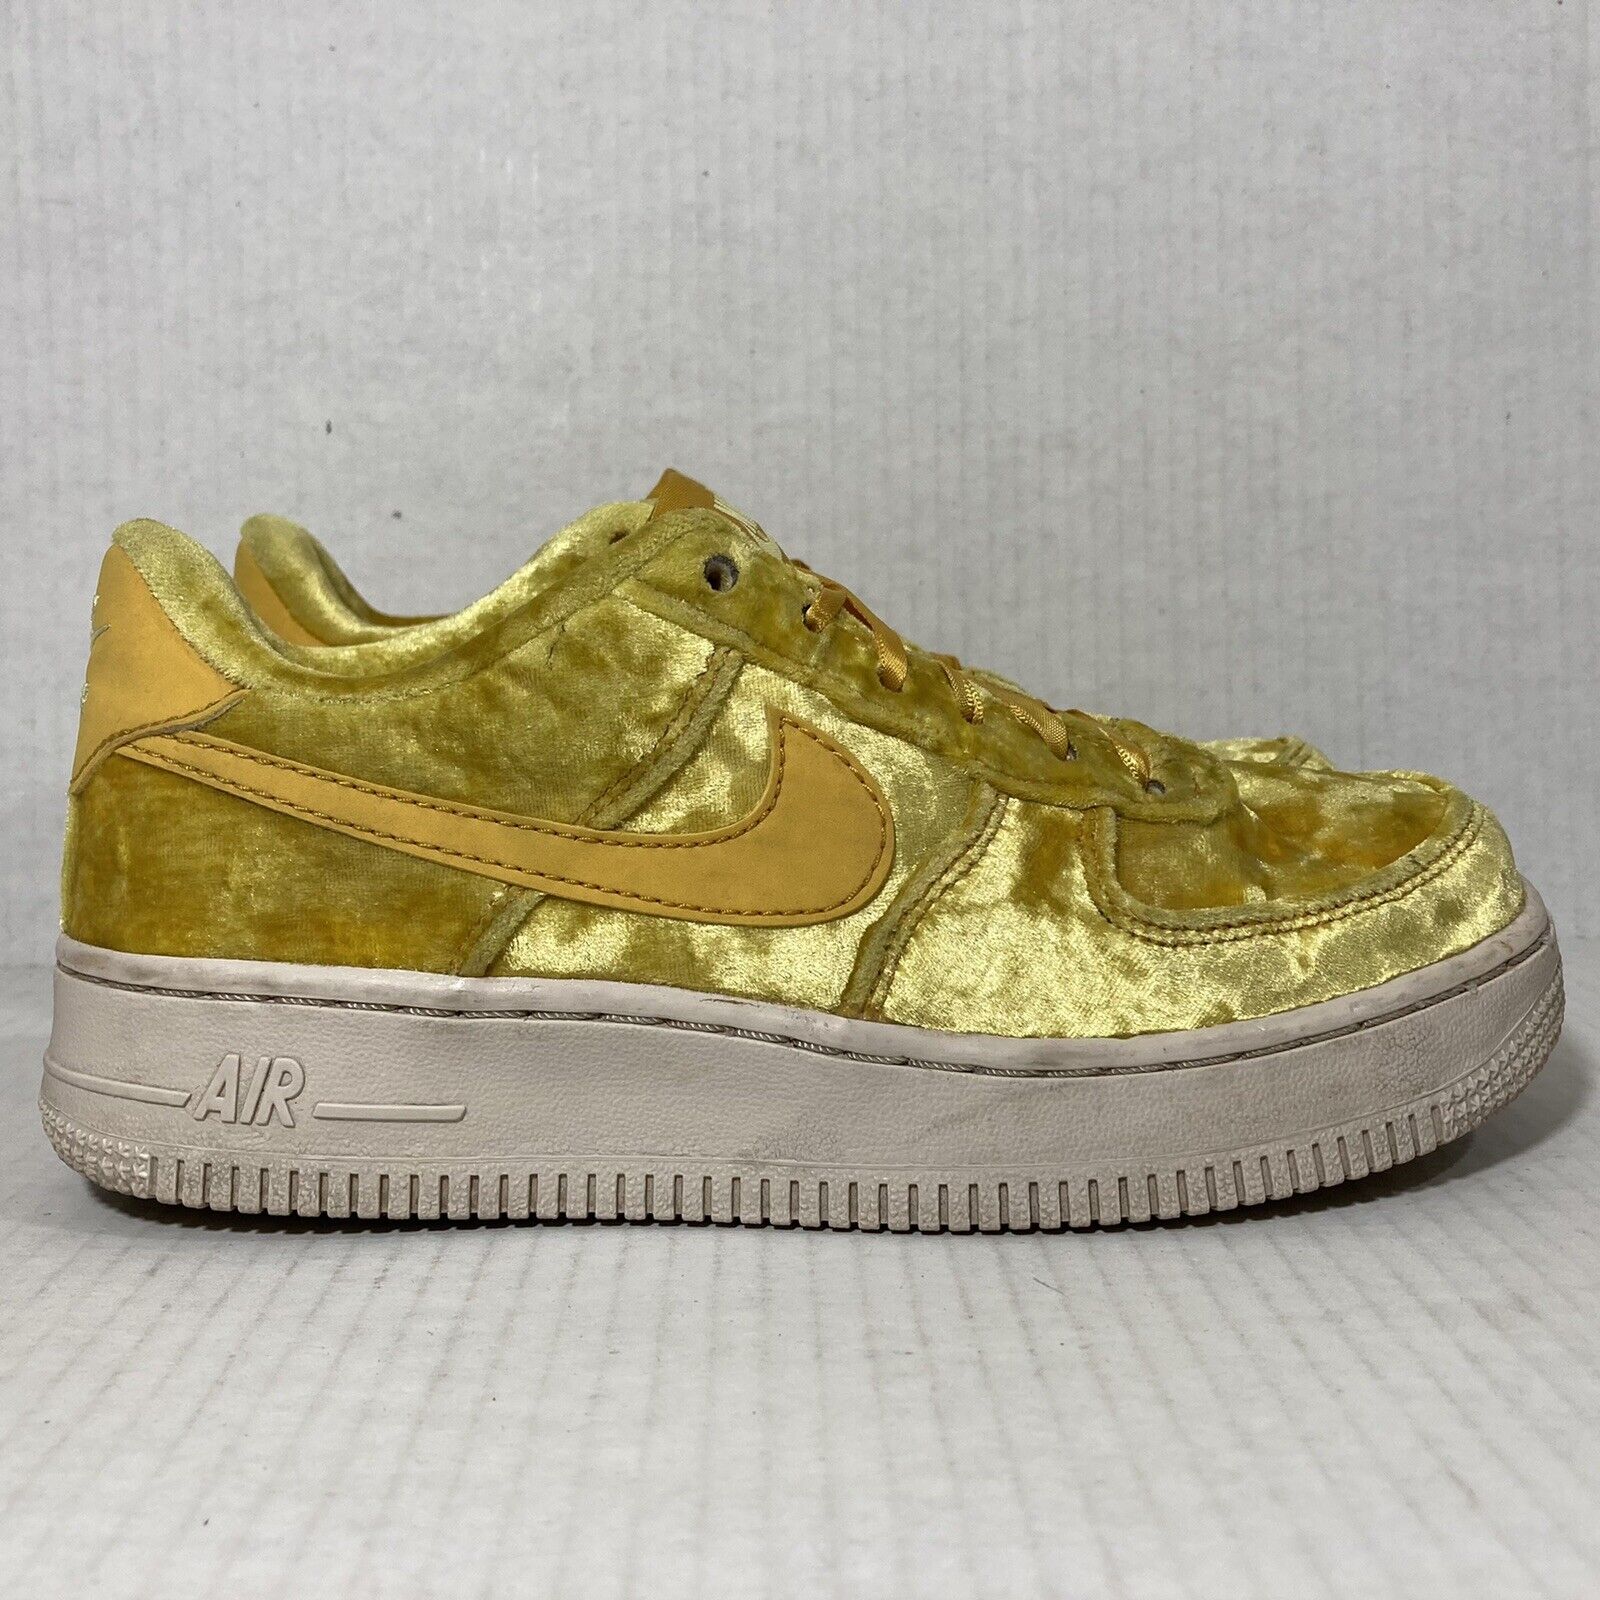 Vormen gesponsord Stuiteren Nike Air Force 1 LV8 Gold Velvet Classic Sneakers Shoes Sz 4Y Womens Sz 5.5  RARE | eBay